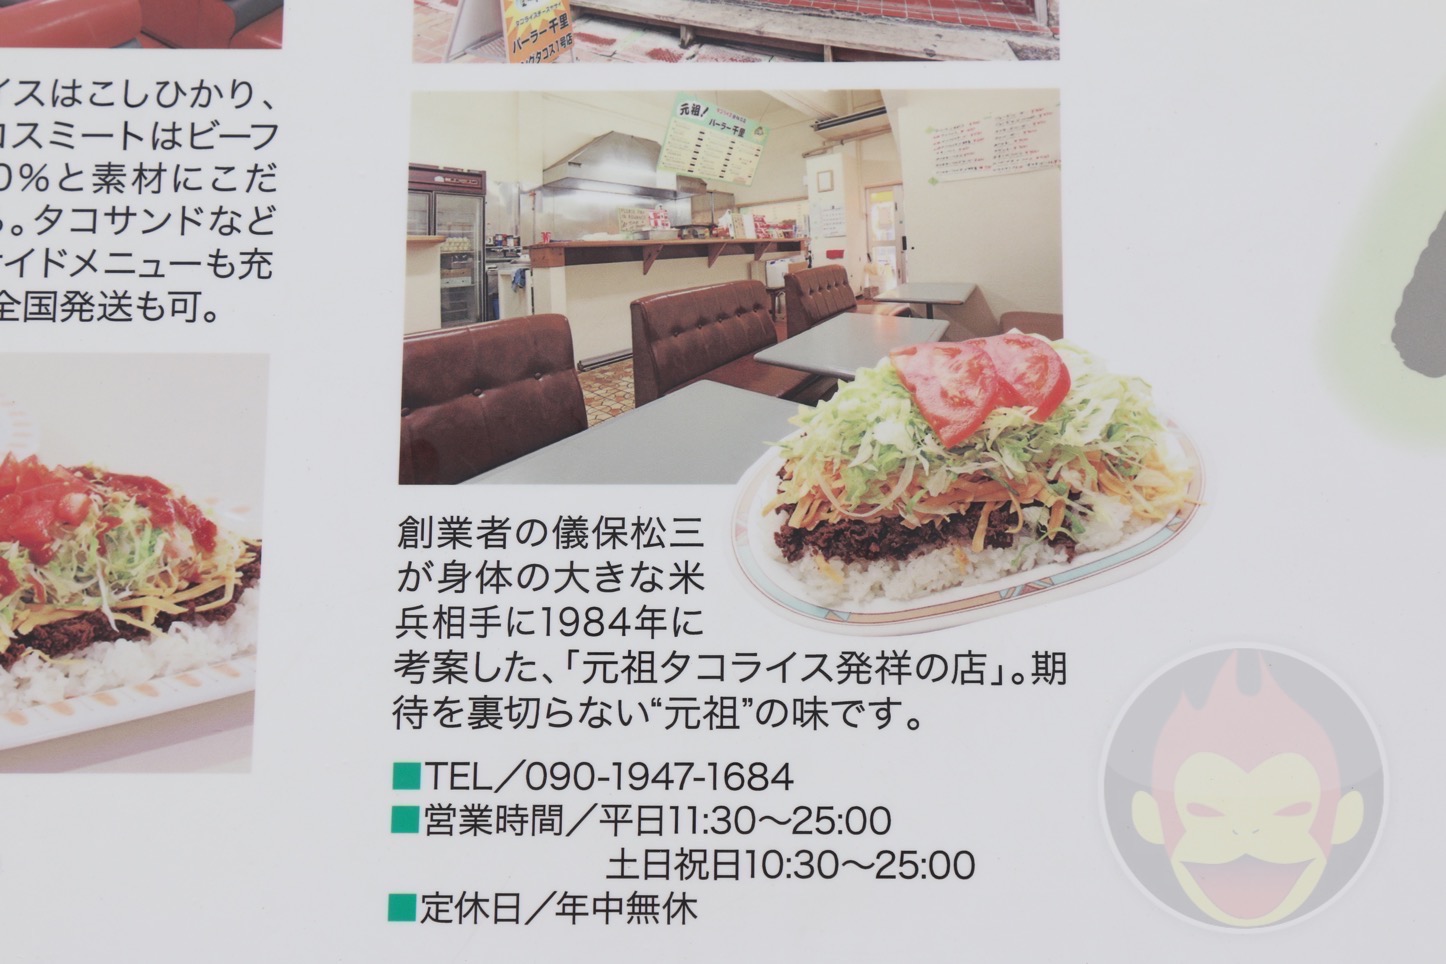 Taco-Rice-Parlor-Chisato-18.jpg